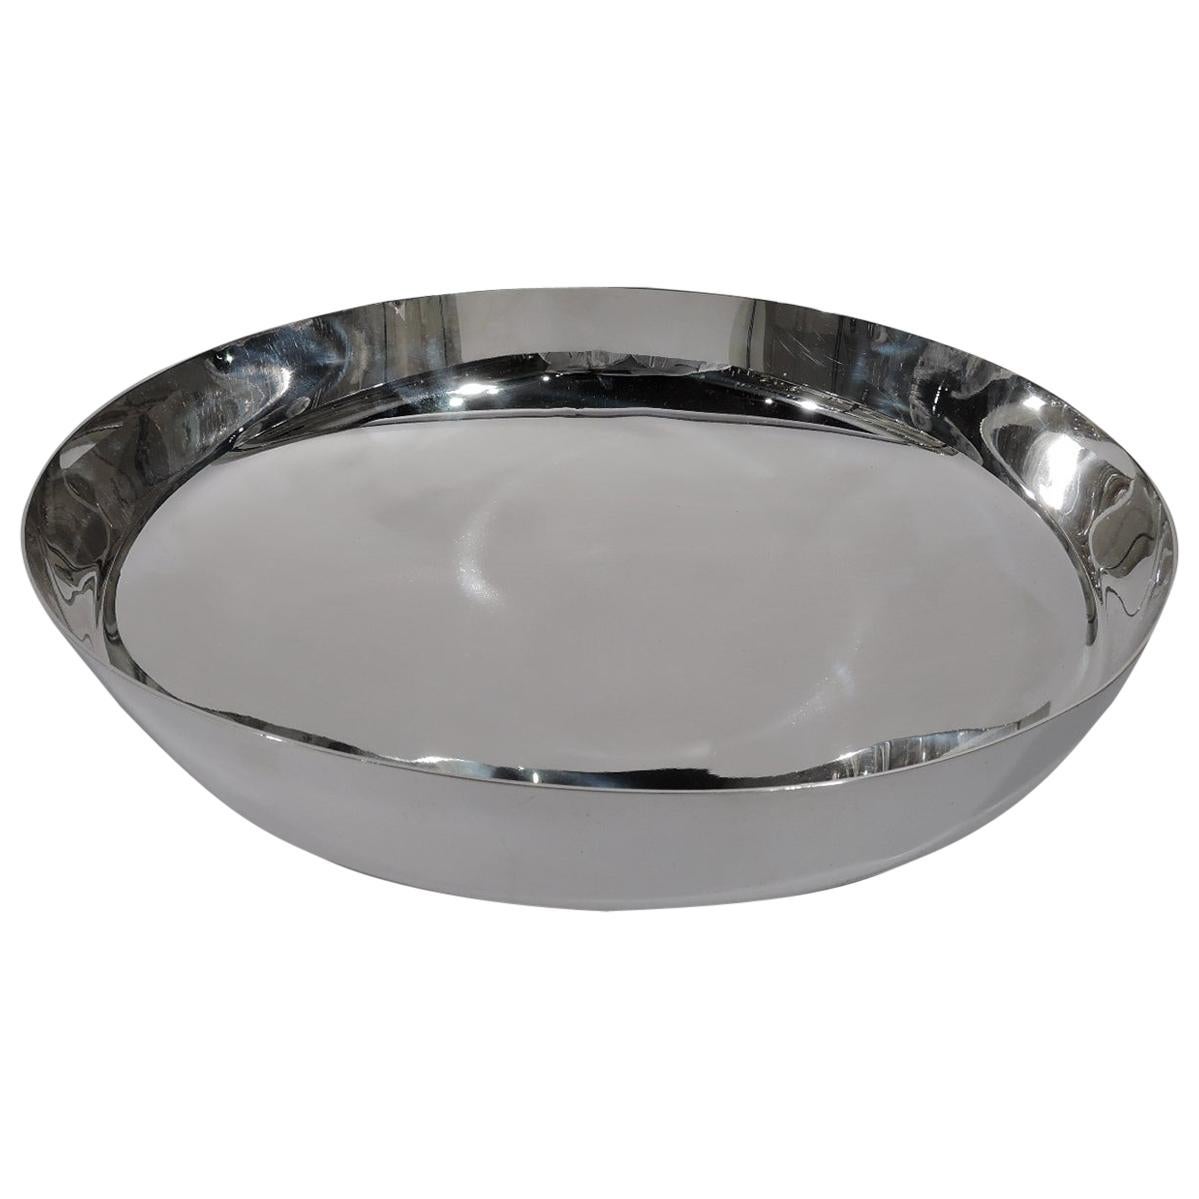 Georg Jensen Mid-Century Modern Sterling Silver Bowl